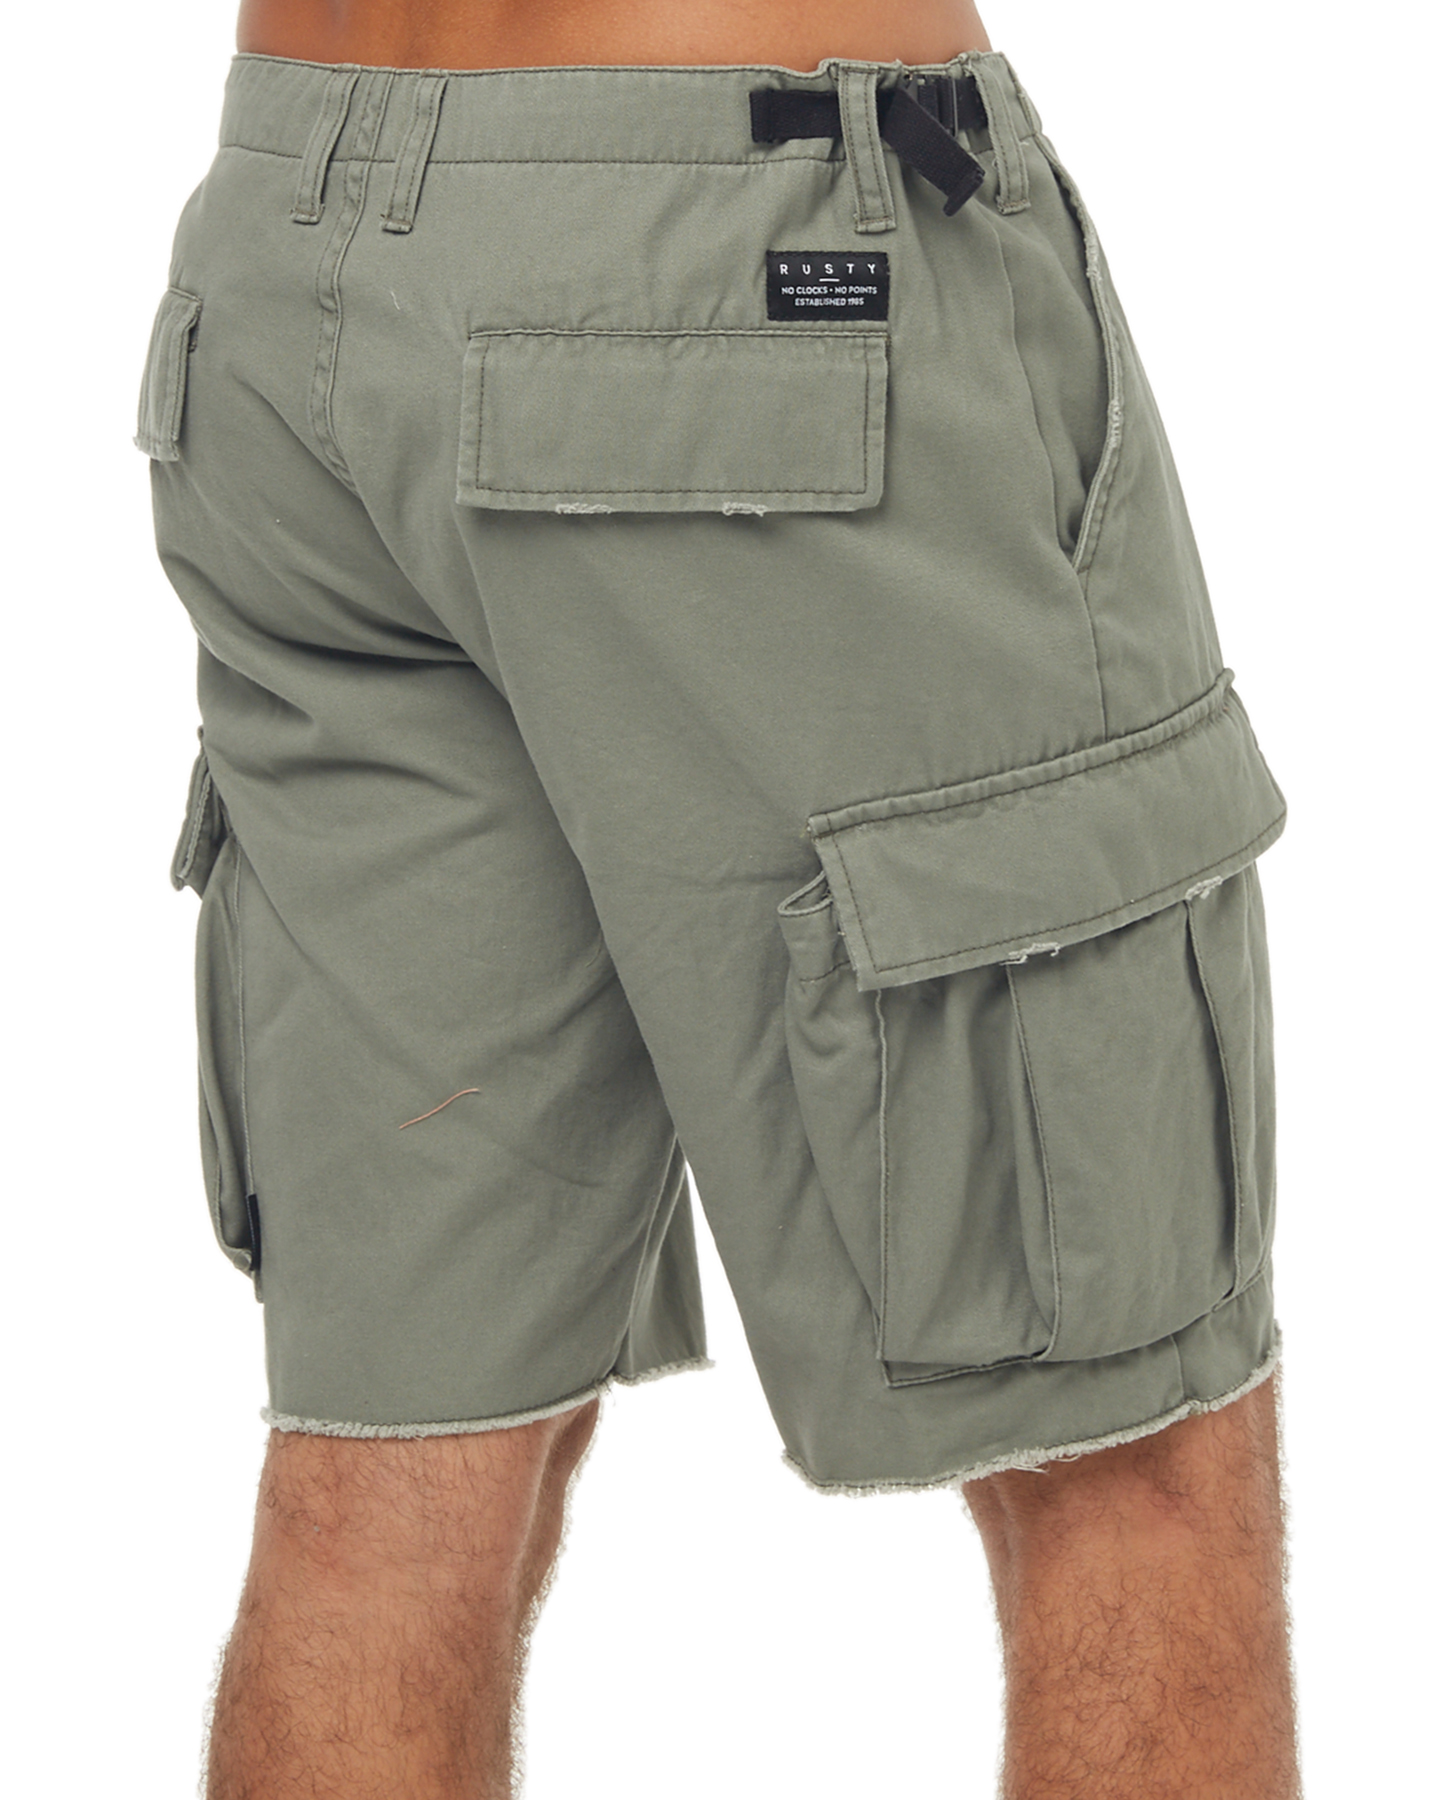 Men Shorts Summer 2017 Knee Length Men Short Pants Cotton